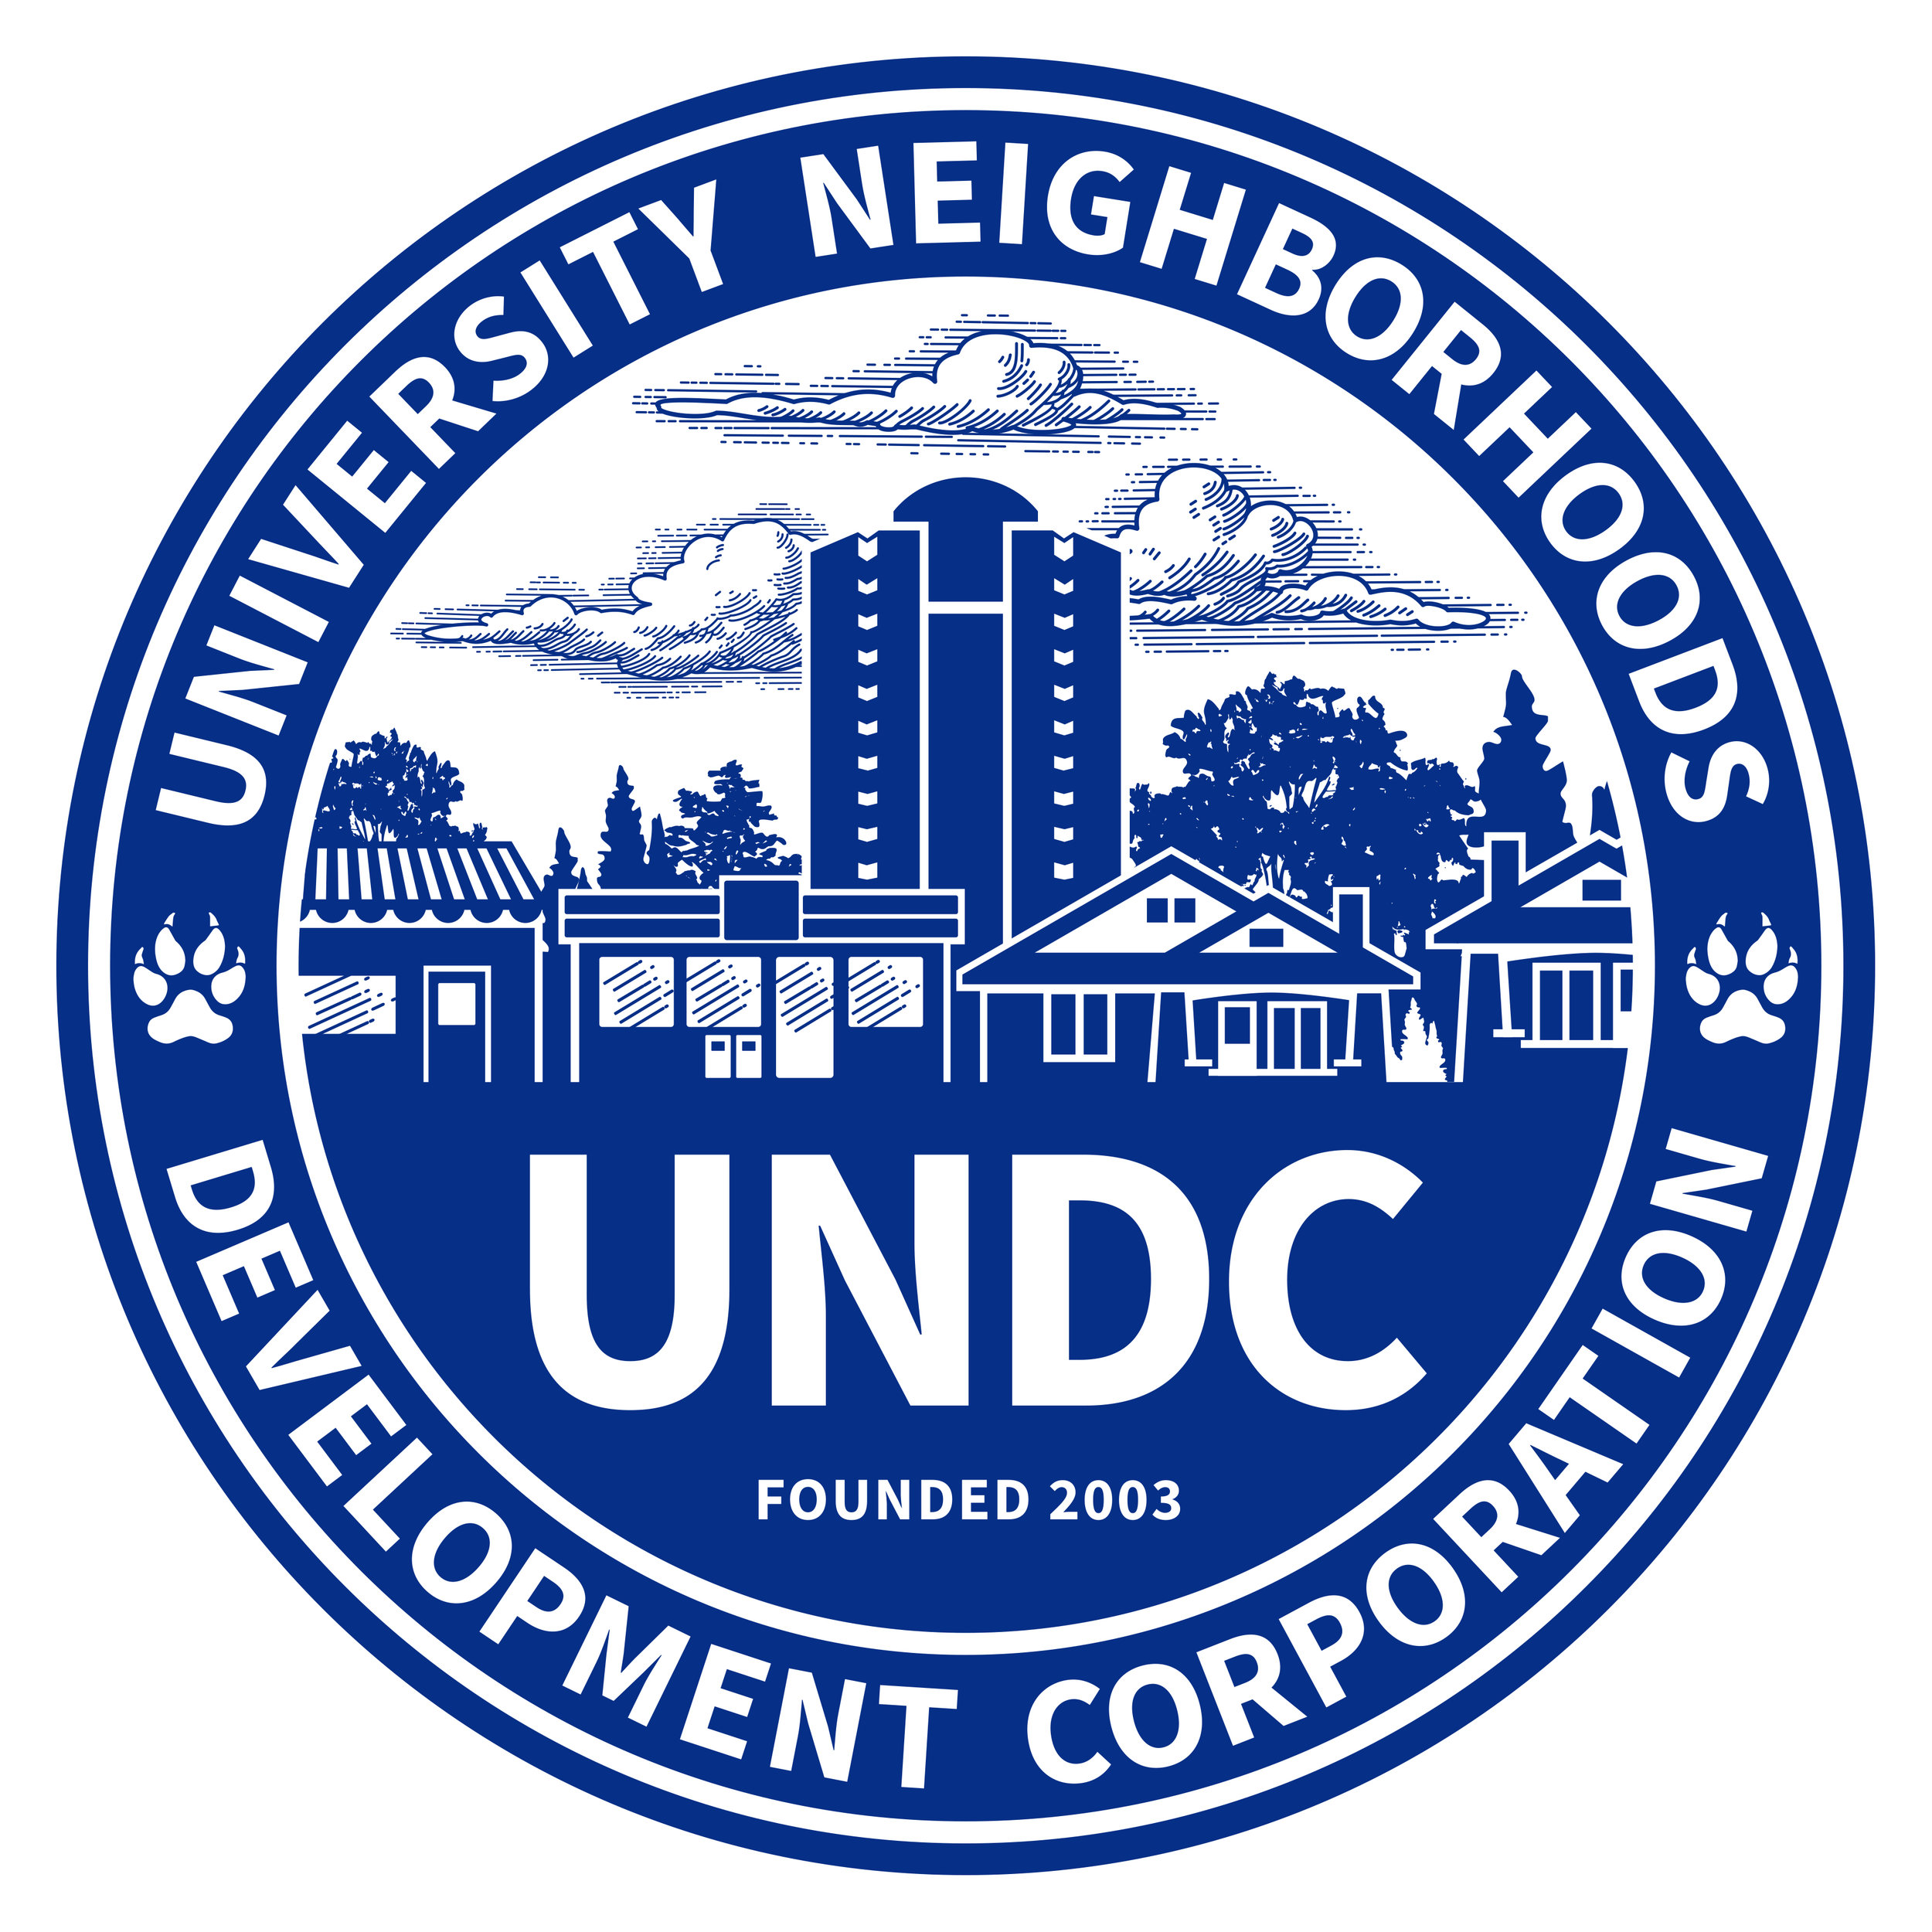 University Neighborhoods Development Corporation